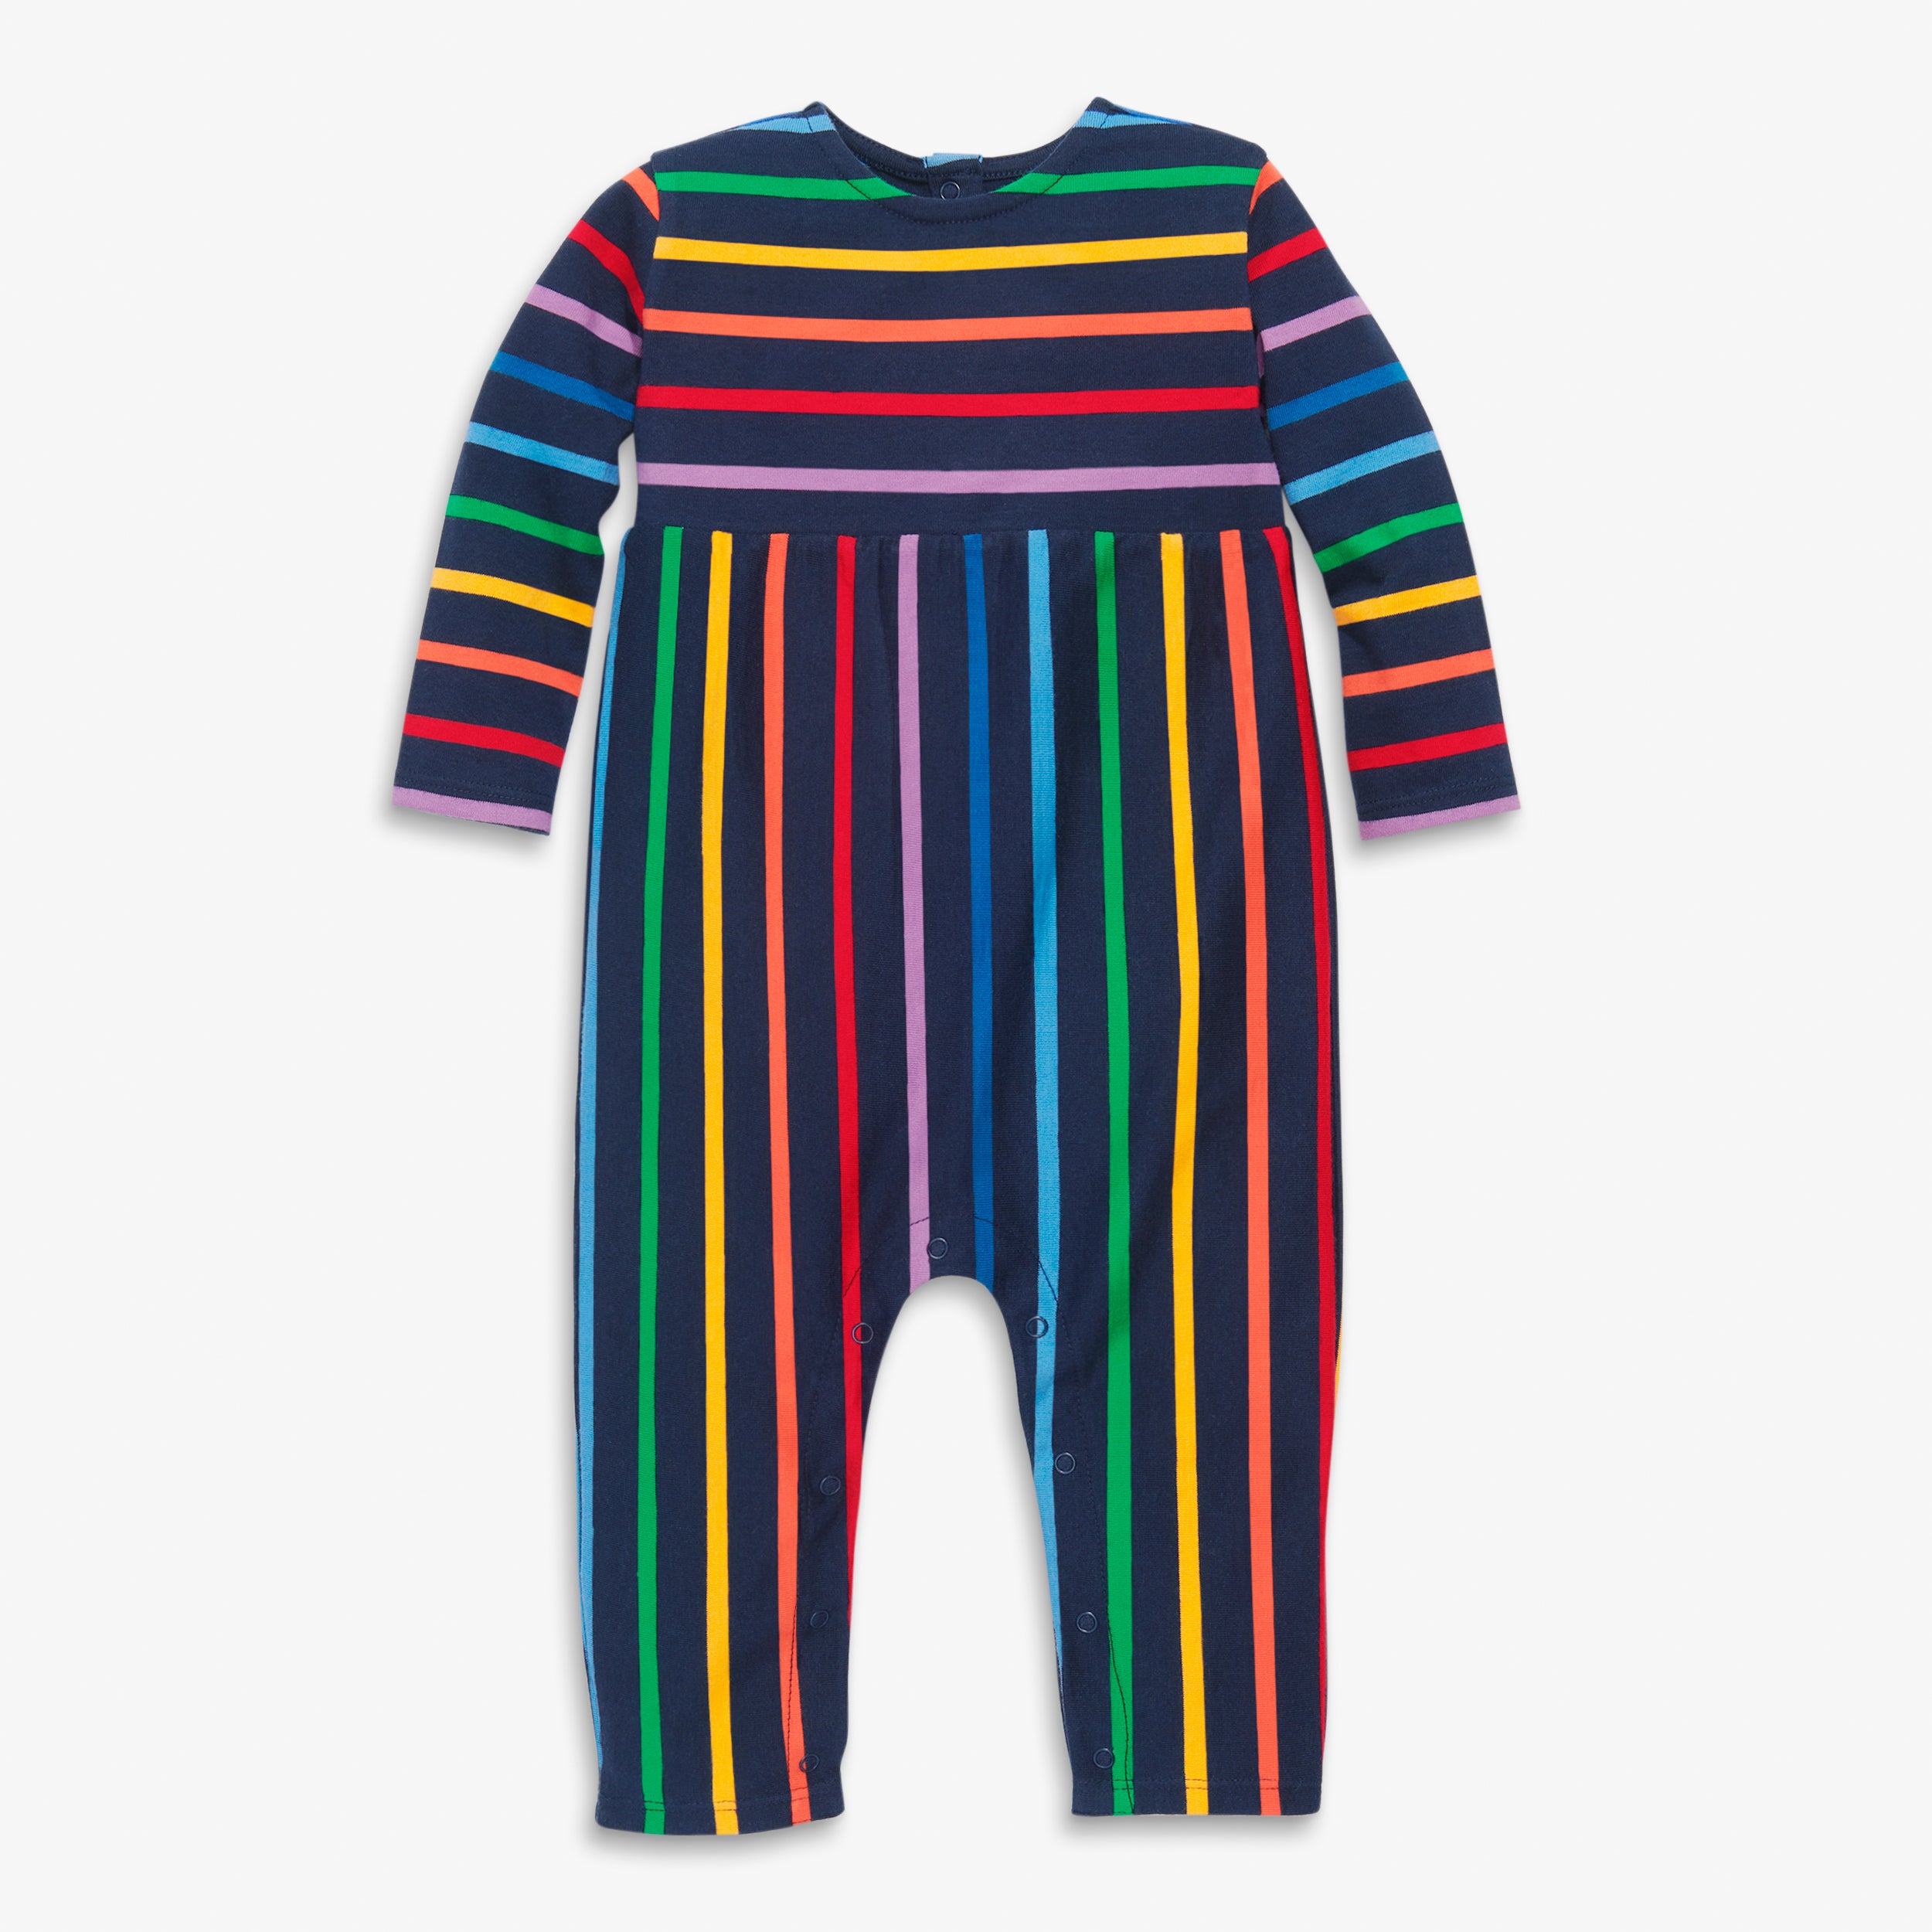 Baby legging in rainbow stripe